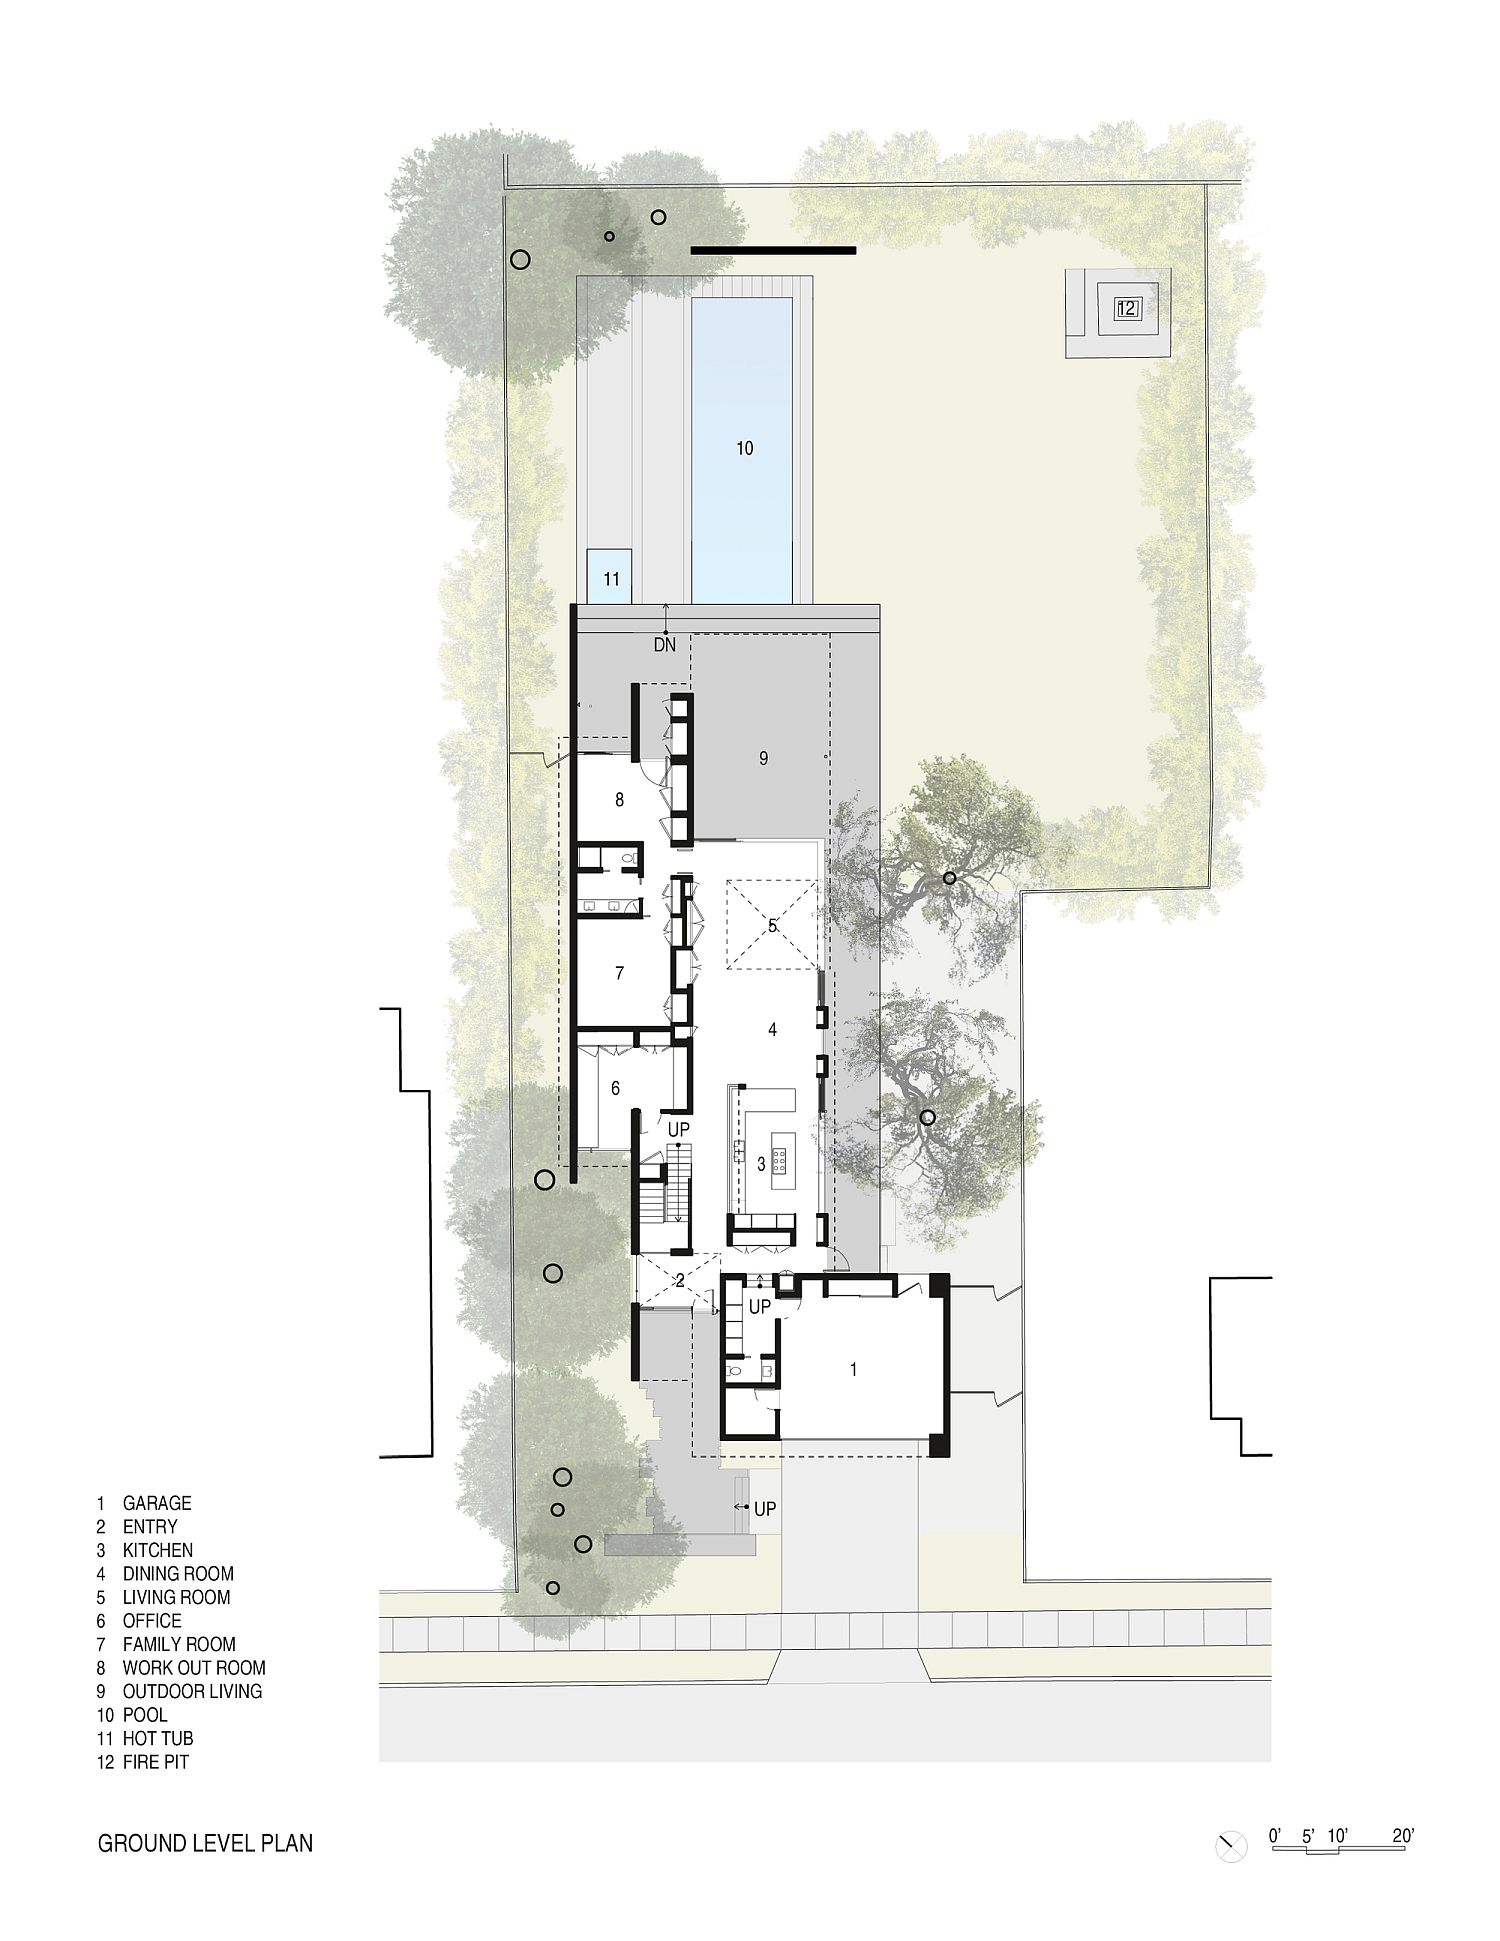 Ground floor plan of the Tree House